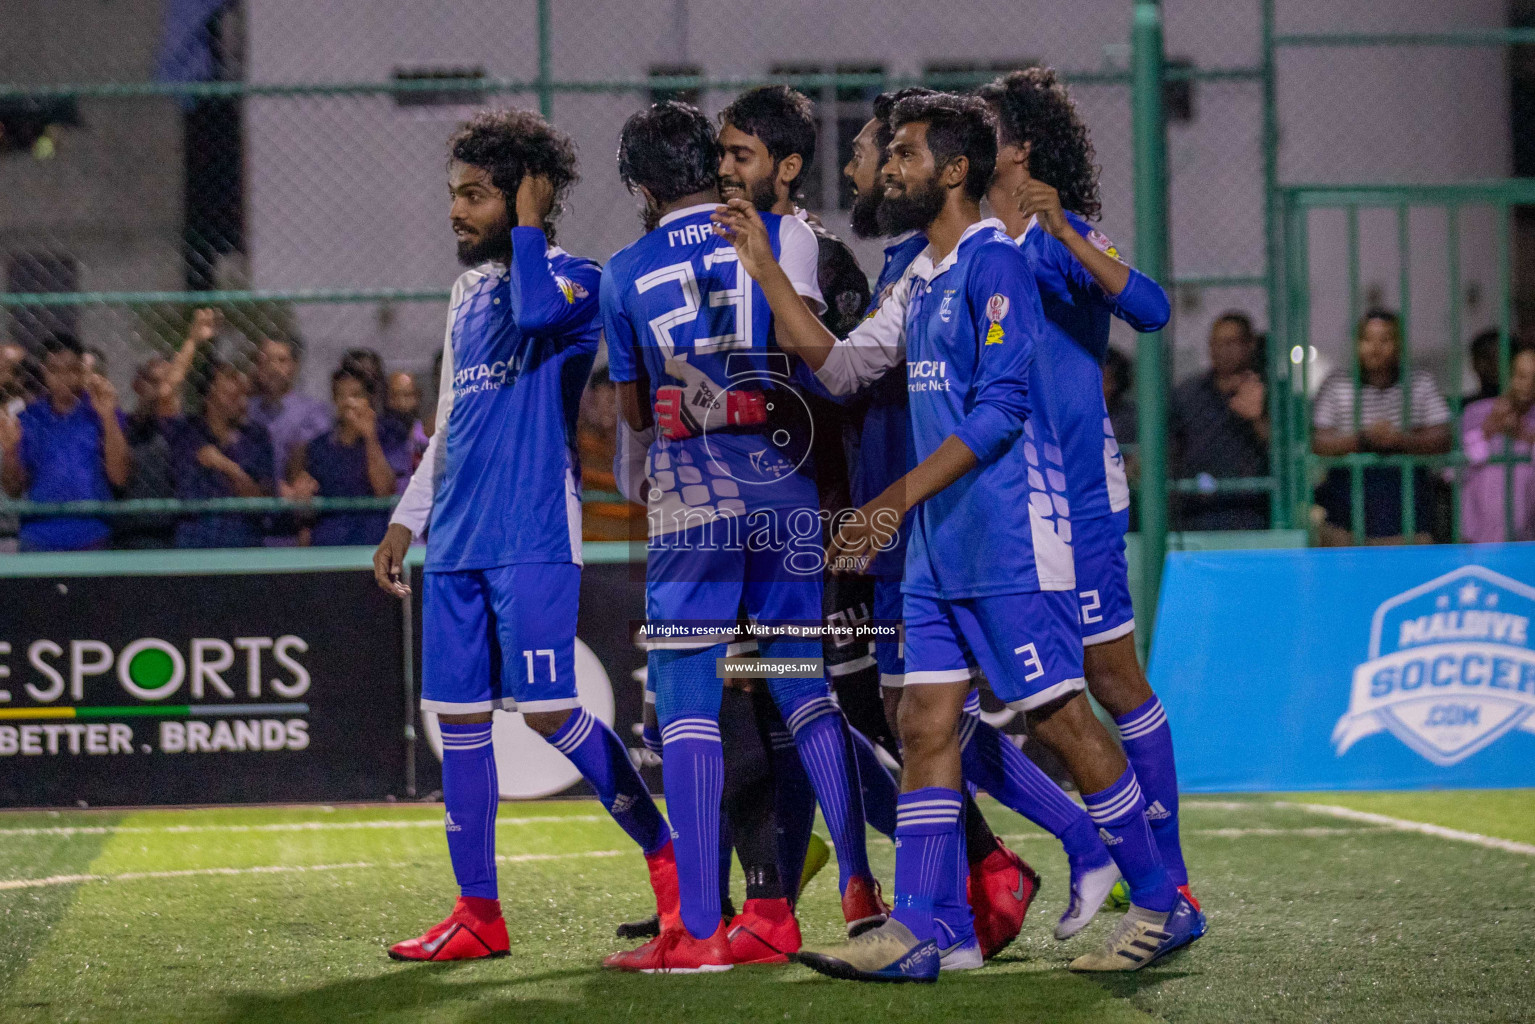 Club Maldives Day 13 in Hulhumale, Male', Maldives on 25th April 2019 Photos: Shuu Abdul Sattar /images.mv